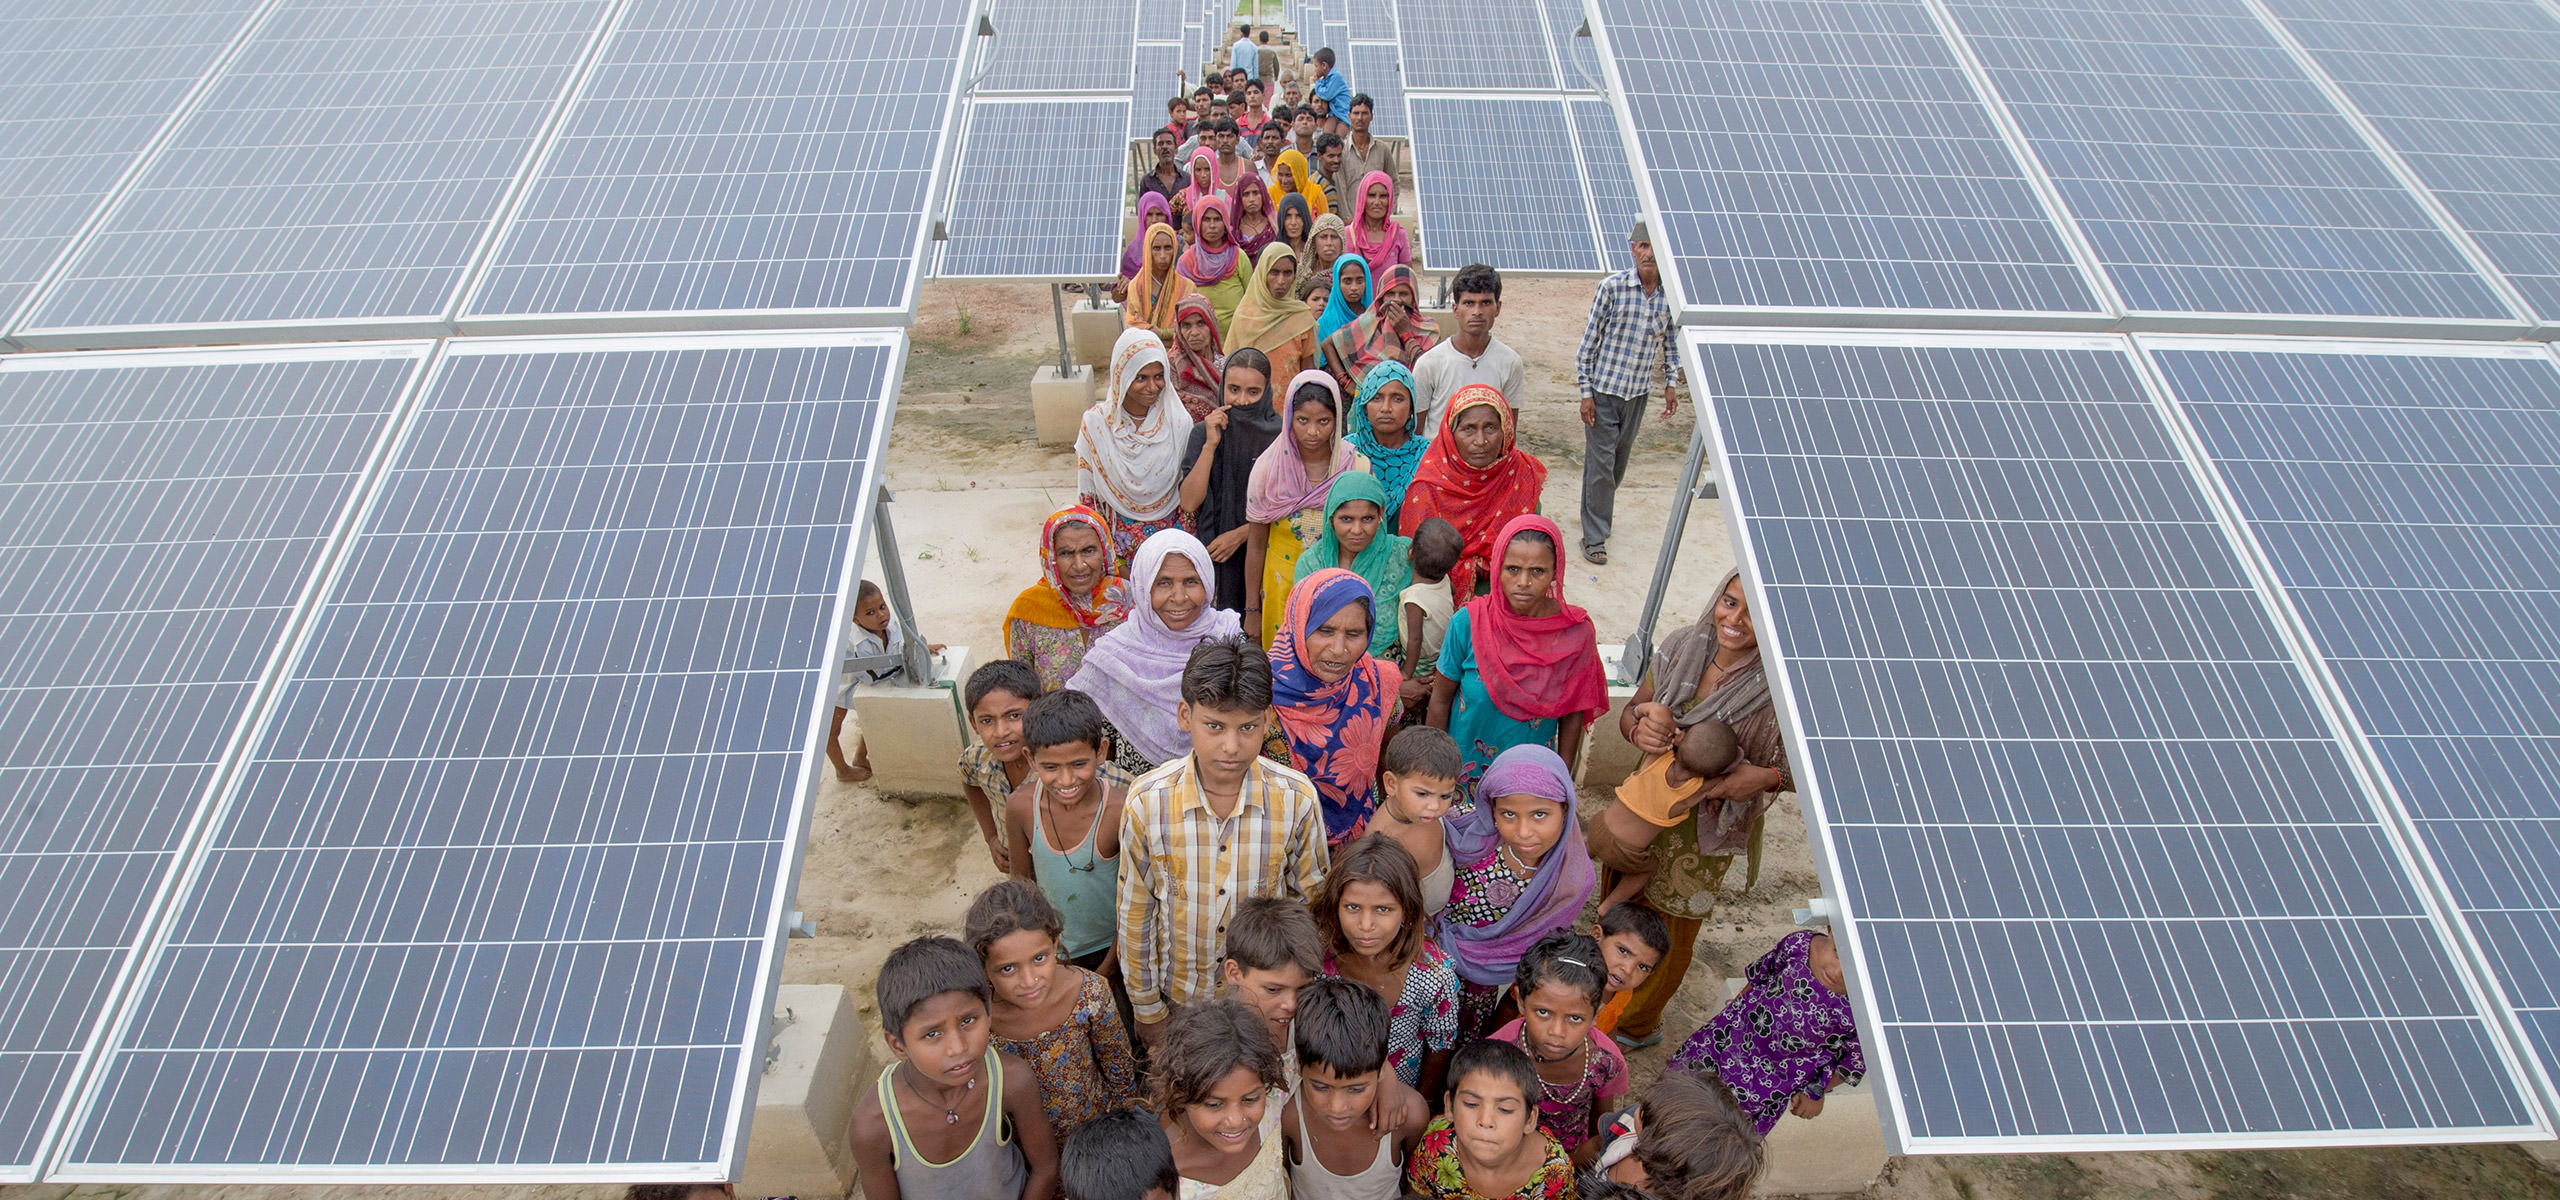 Solar panels with children